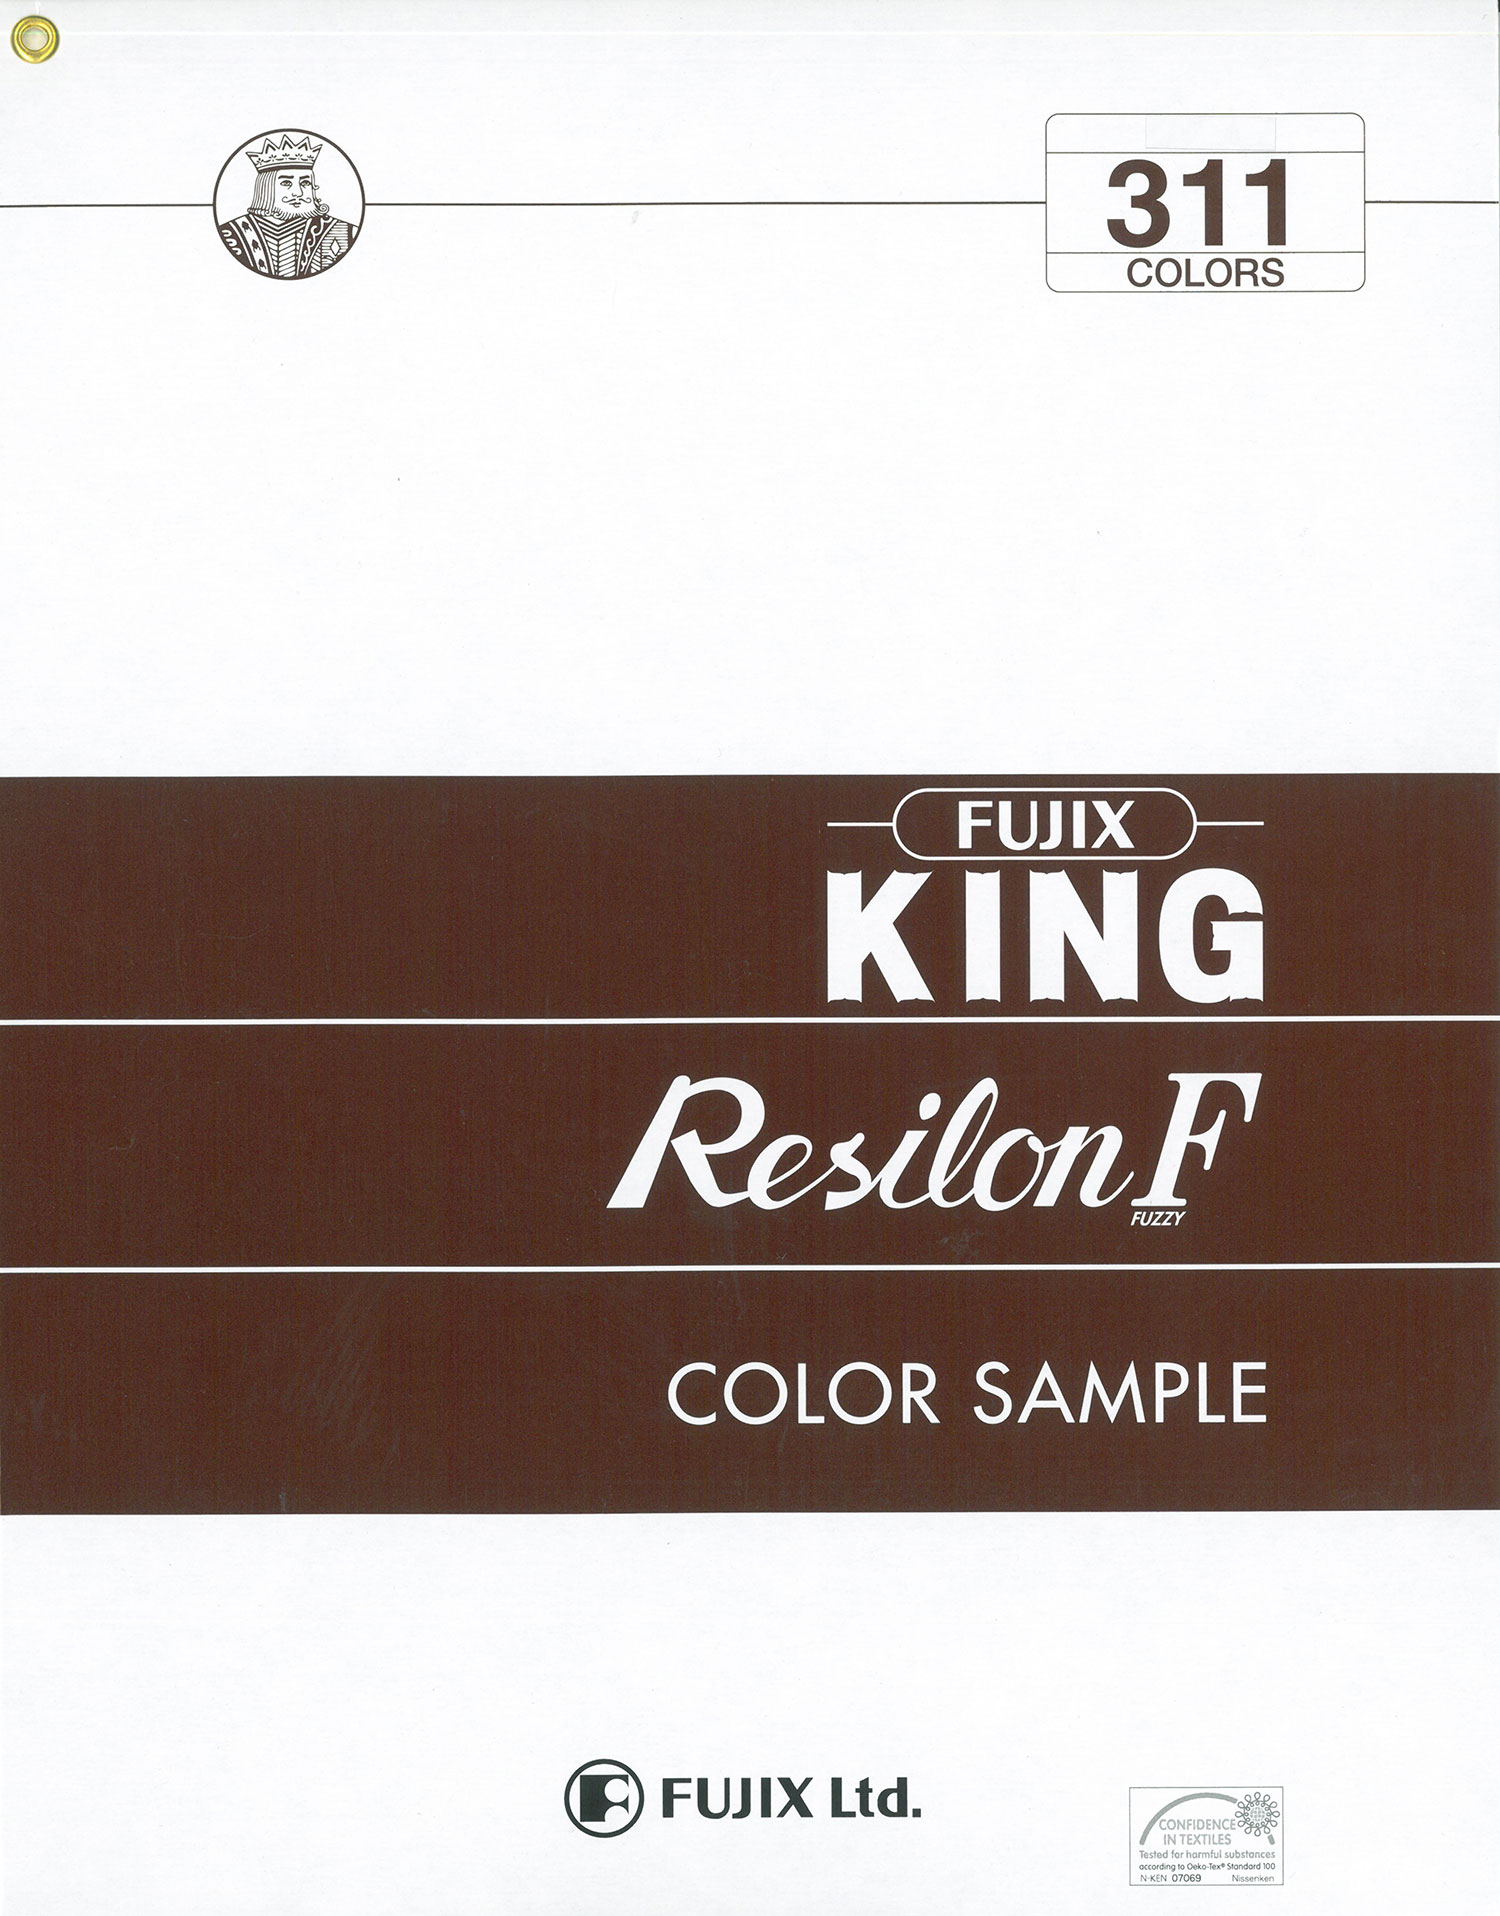 FUJIX-SAMPLE-7 KING Resilon FUZZY[Cartão De Amostra] FUJIX